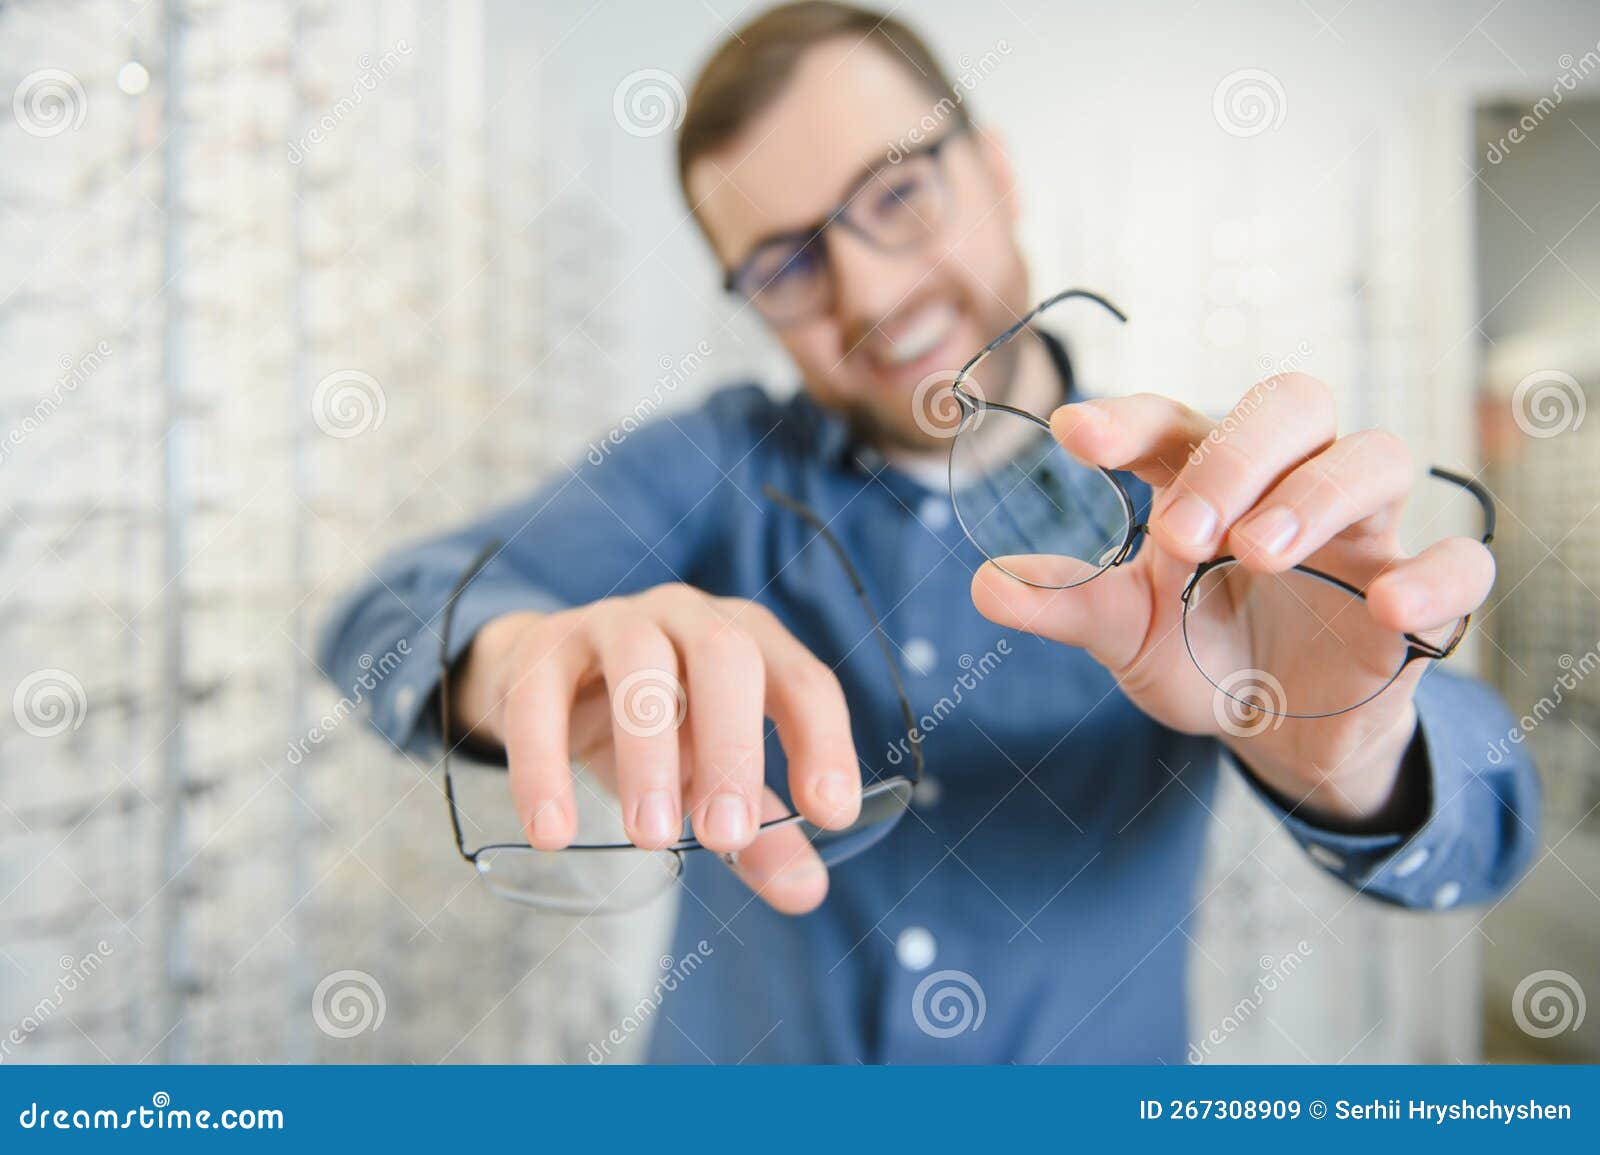 Male Client Chooing New Eyeglasses Frame for His New Eyeglasses in ...